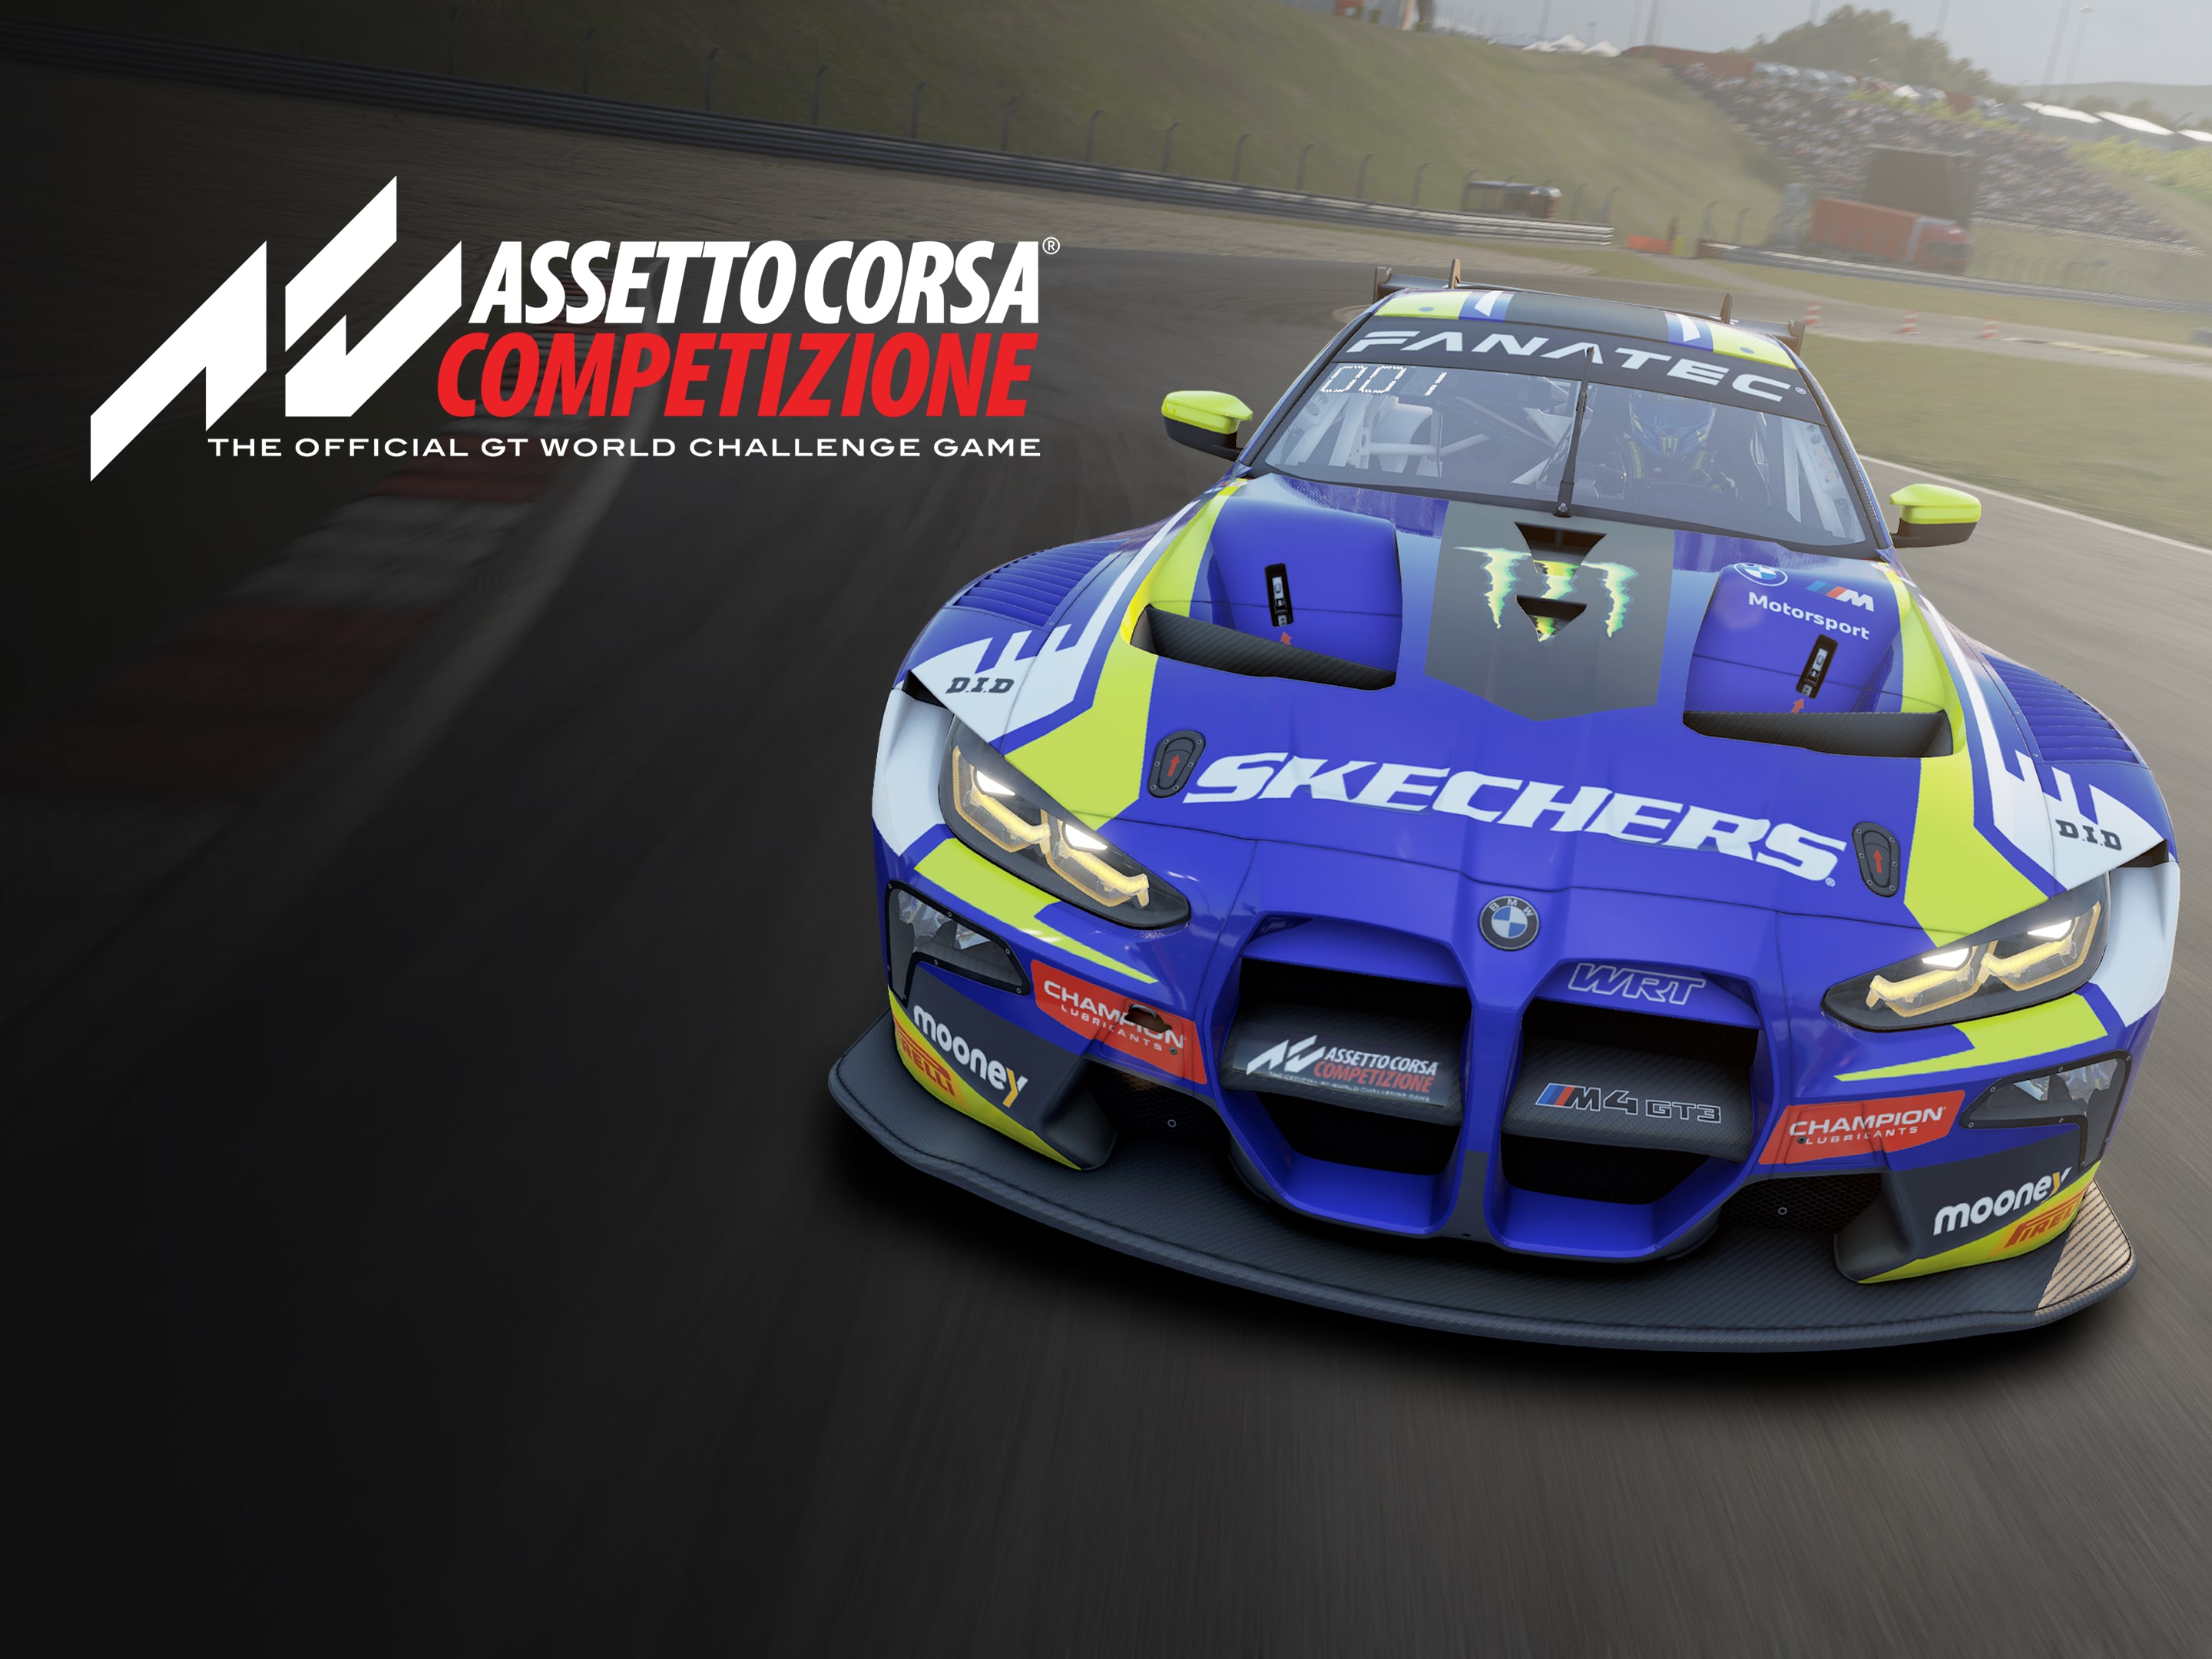 Assetto Corsa Competizione - PlayStation 4 – J&L Video Games New York City